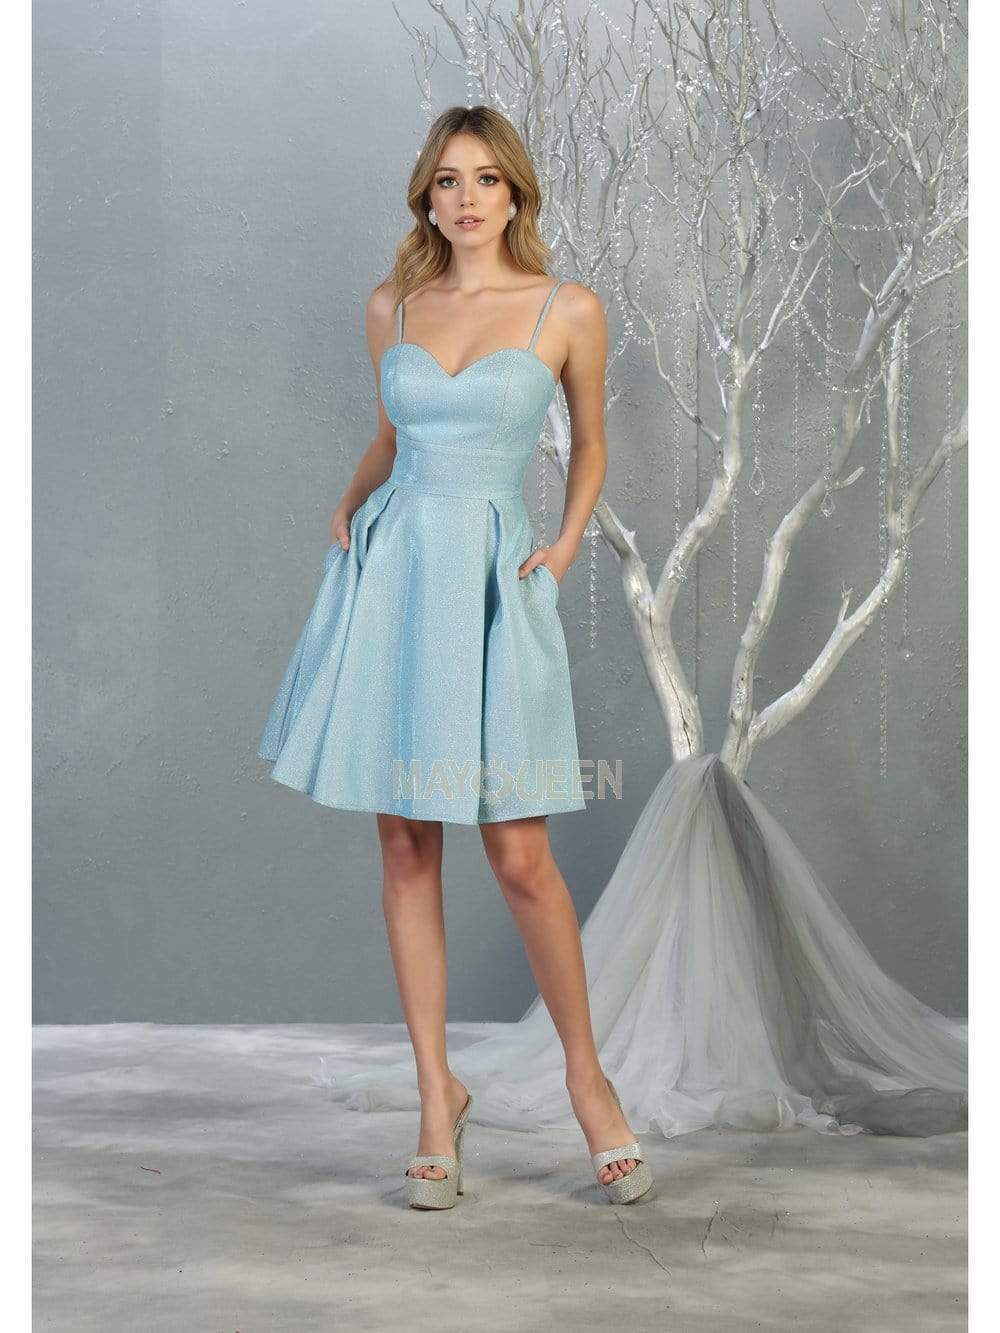 May Queen - MQ1791 Short Sweetheart Bodice Glitter A-Line Dress
